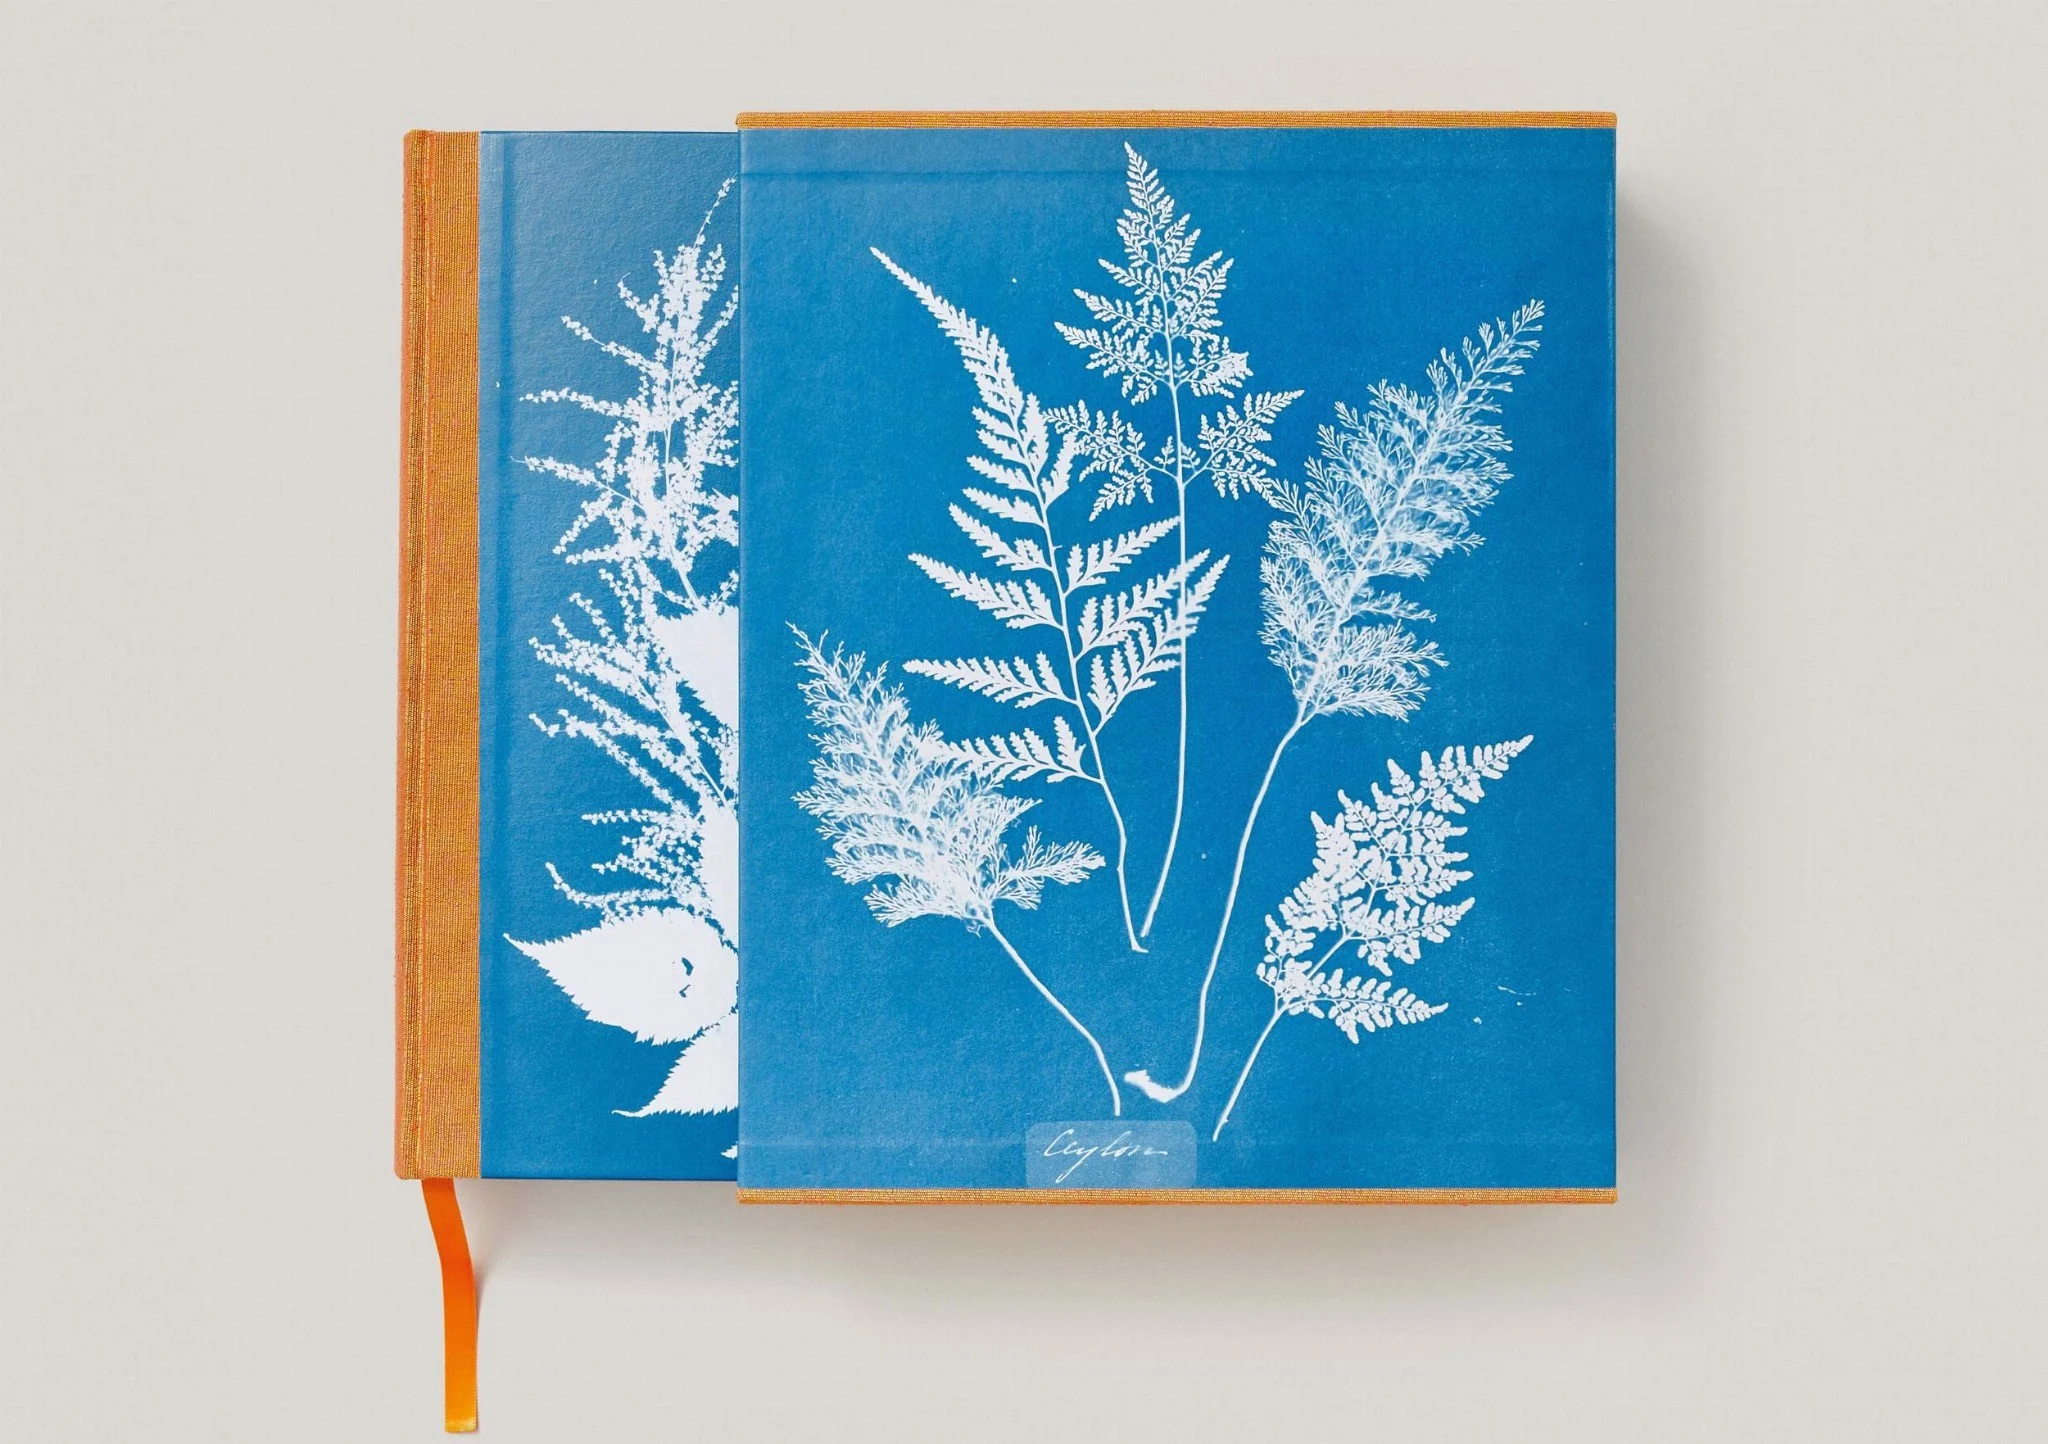 Artbook - Sách Tiếng Anh - Anna Atkins: Cyanotypes